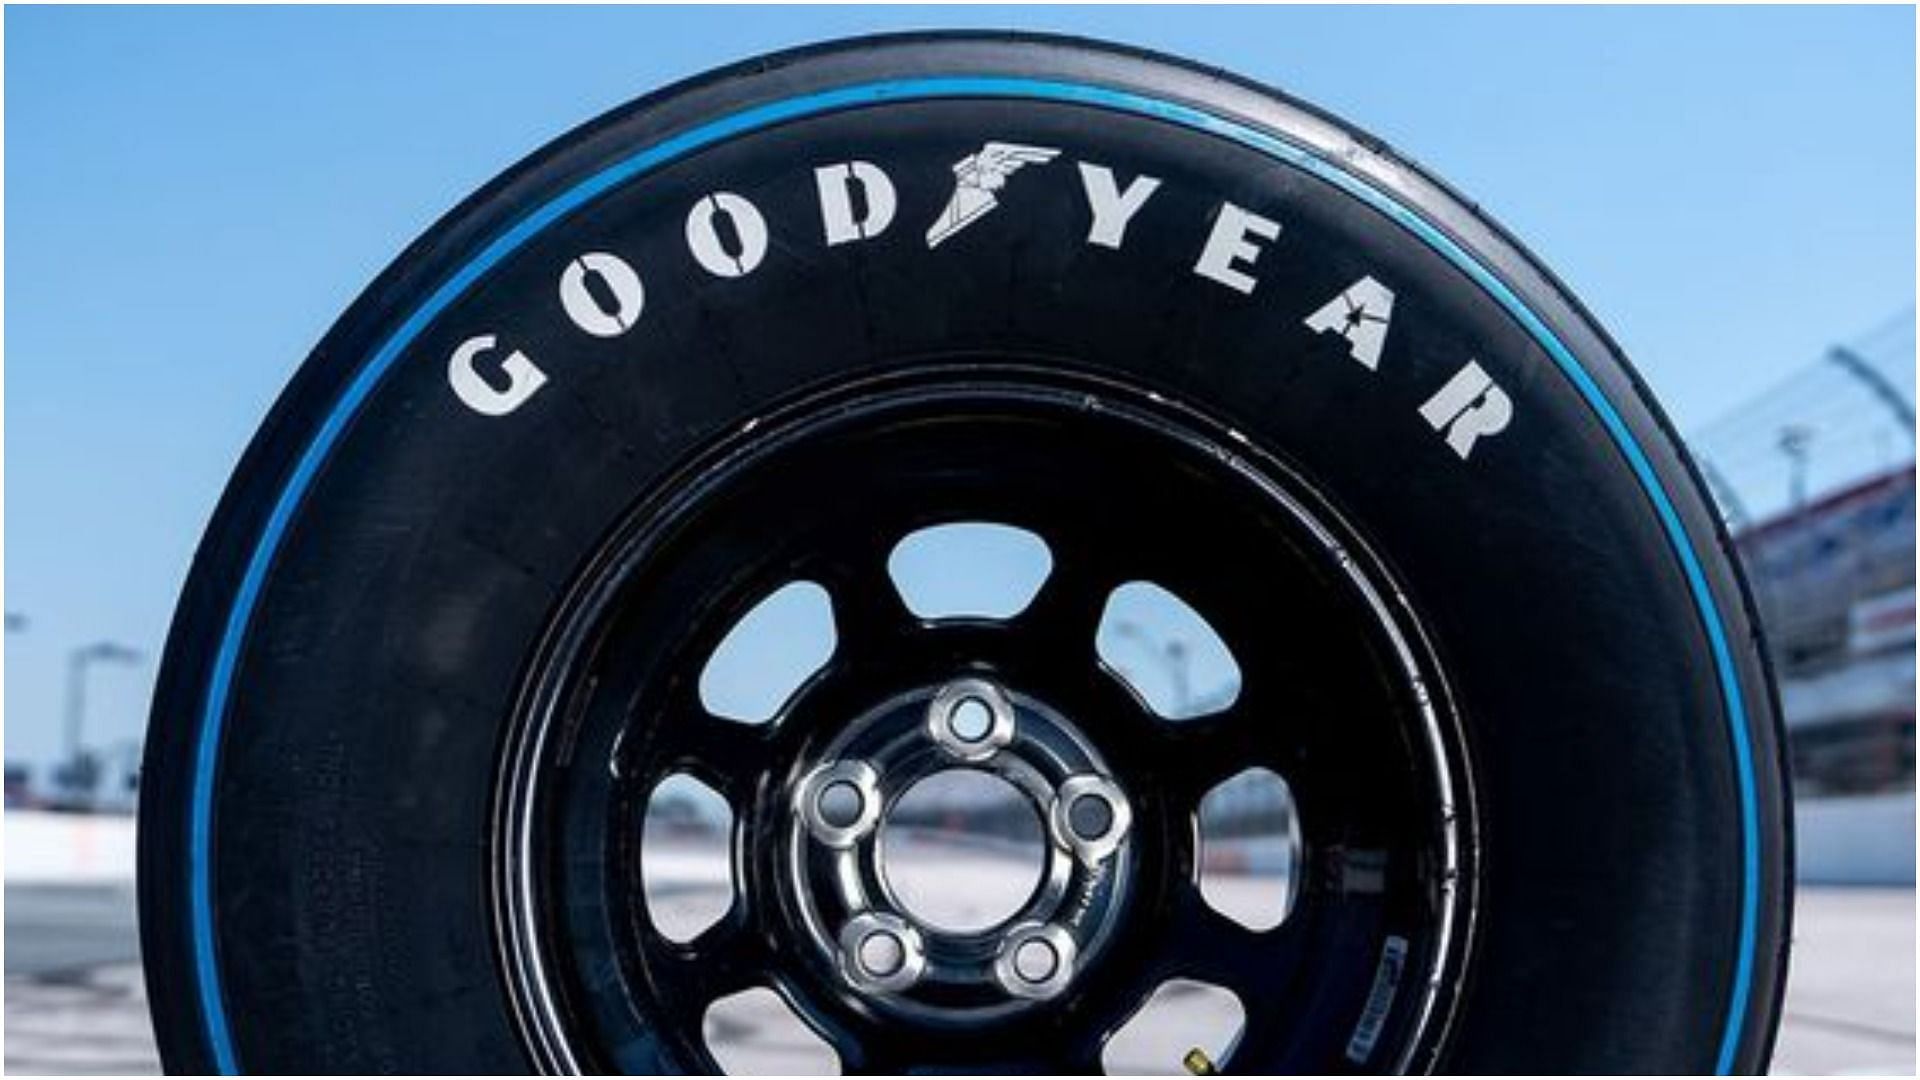 Goodyear recall 2022: Tire size revealed amid car crash fears